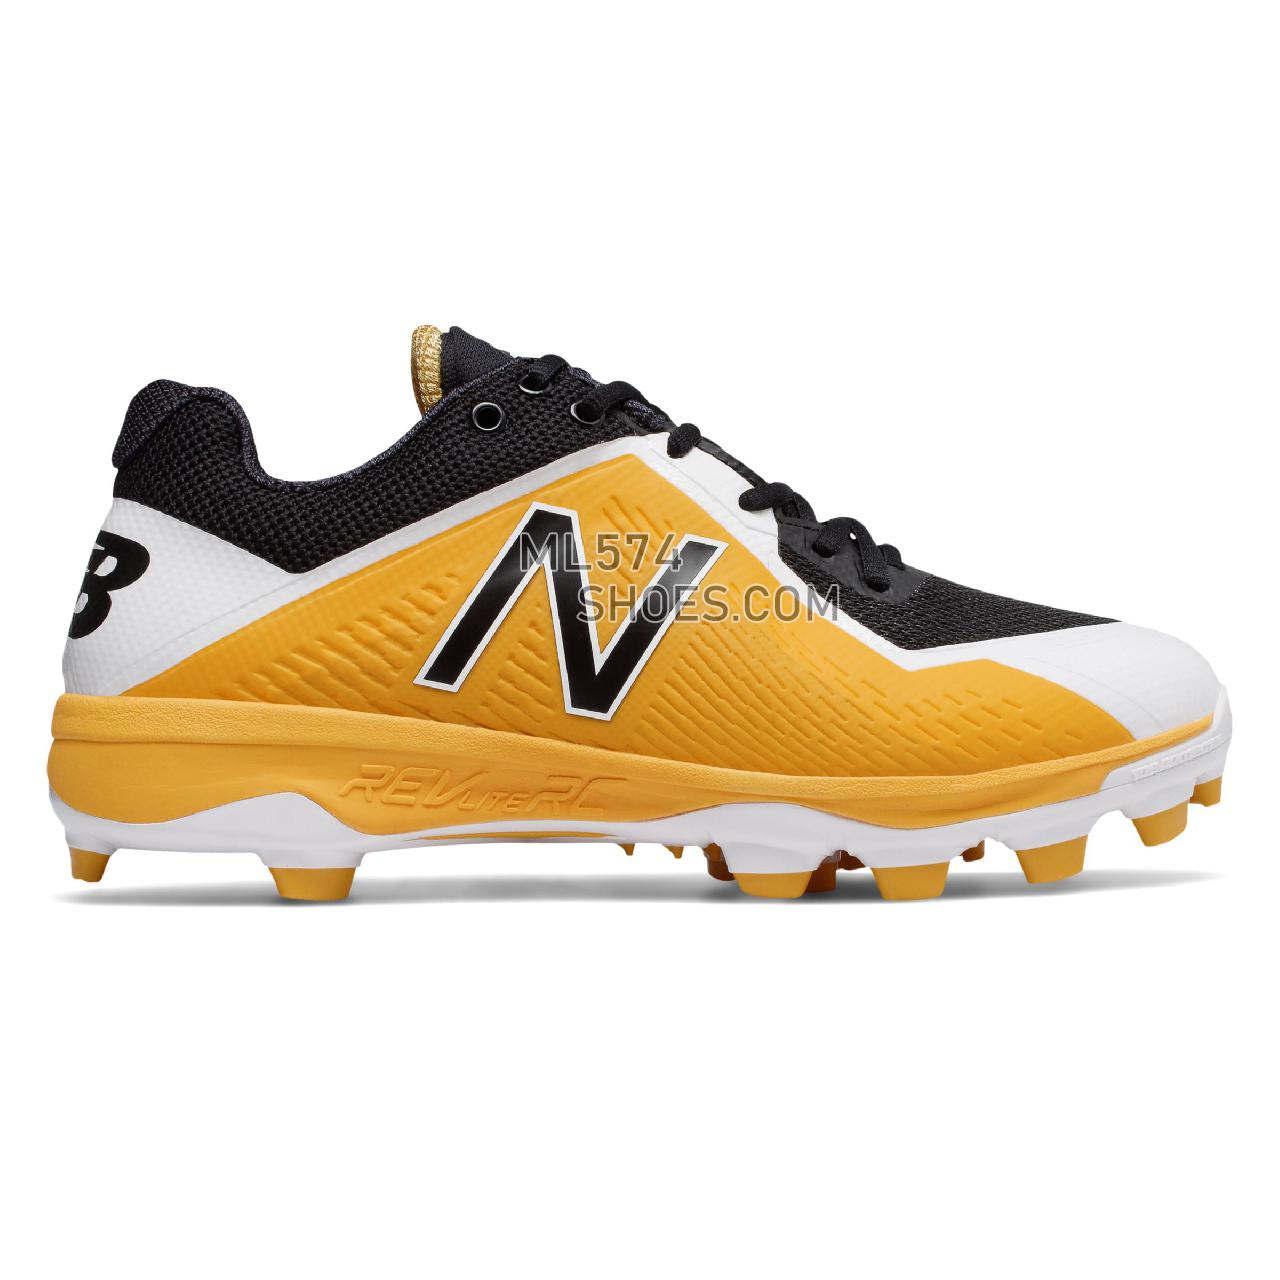 New Balance TPU 4040v4 - Men's 4040 - Baseball Black with Yellow - PL4040Y4